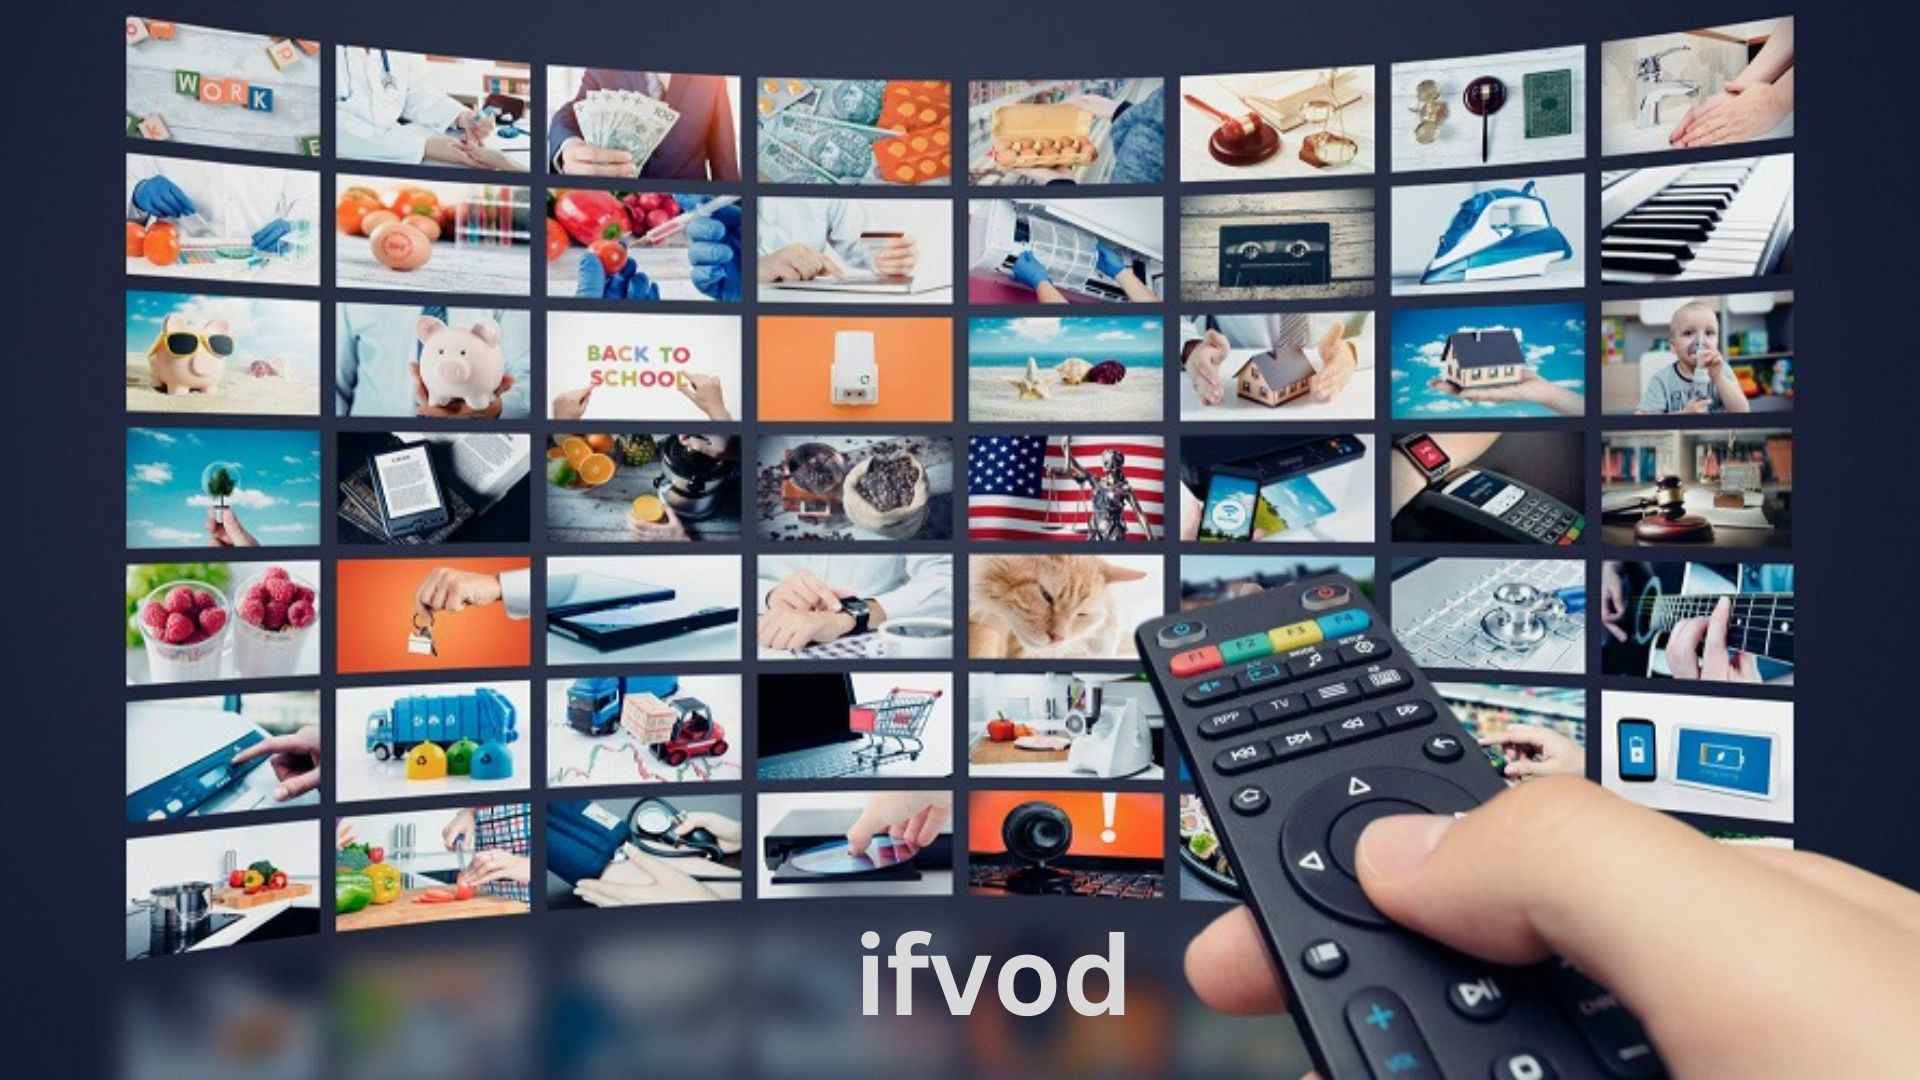 Ifvod Features, Purpose, Advantages and Disadvantages